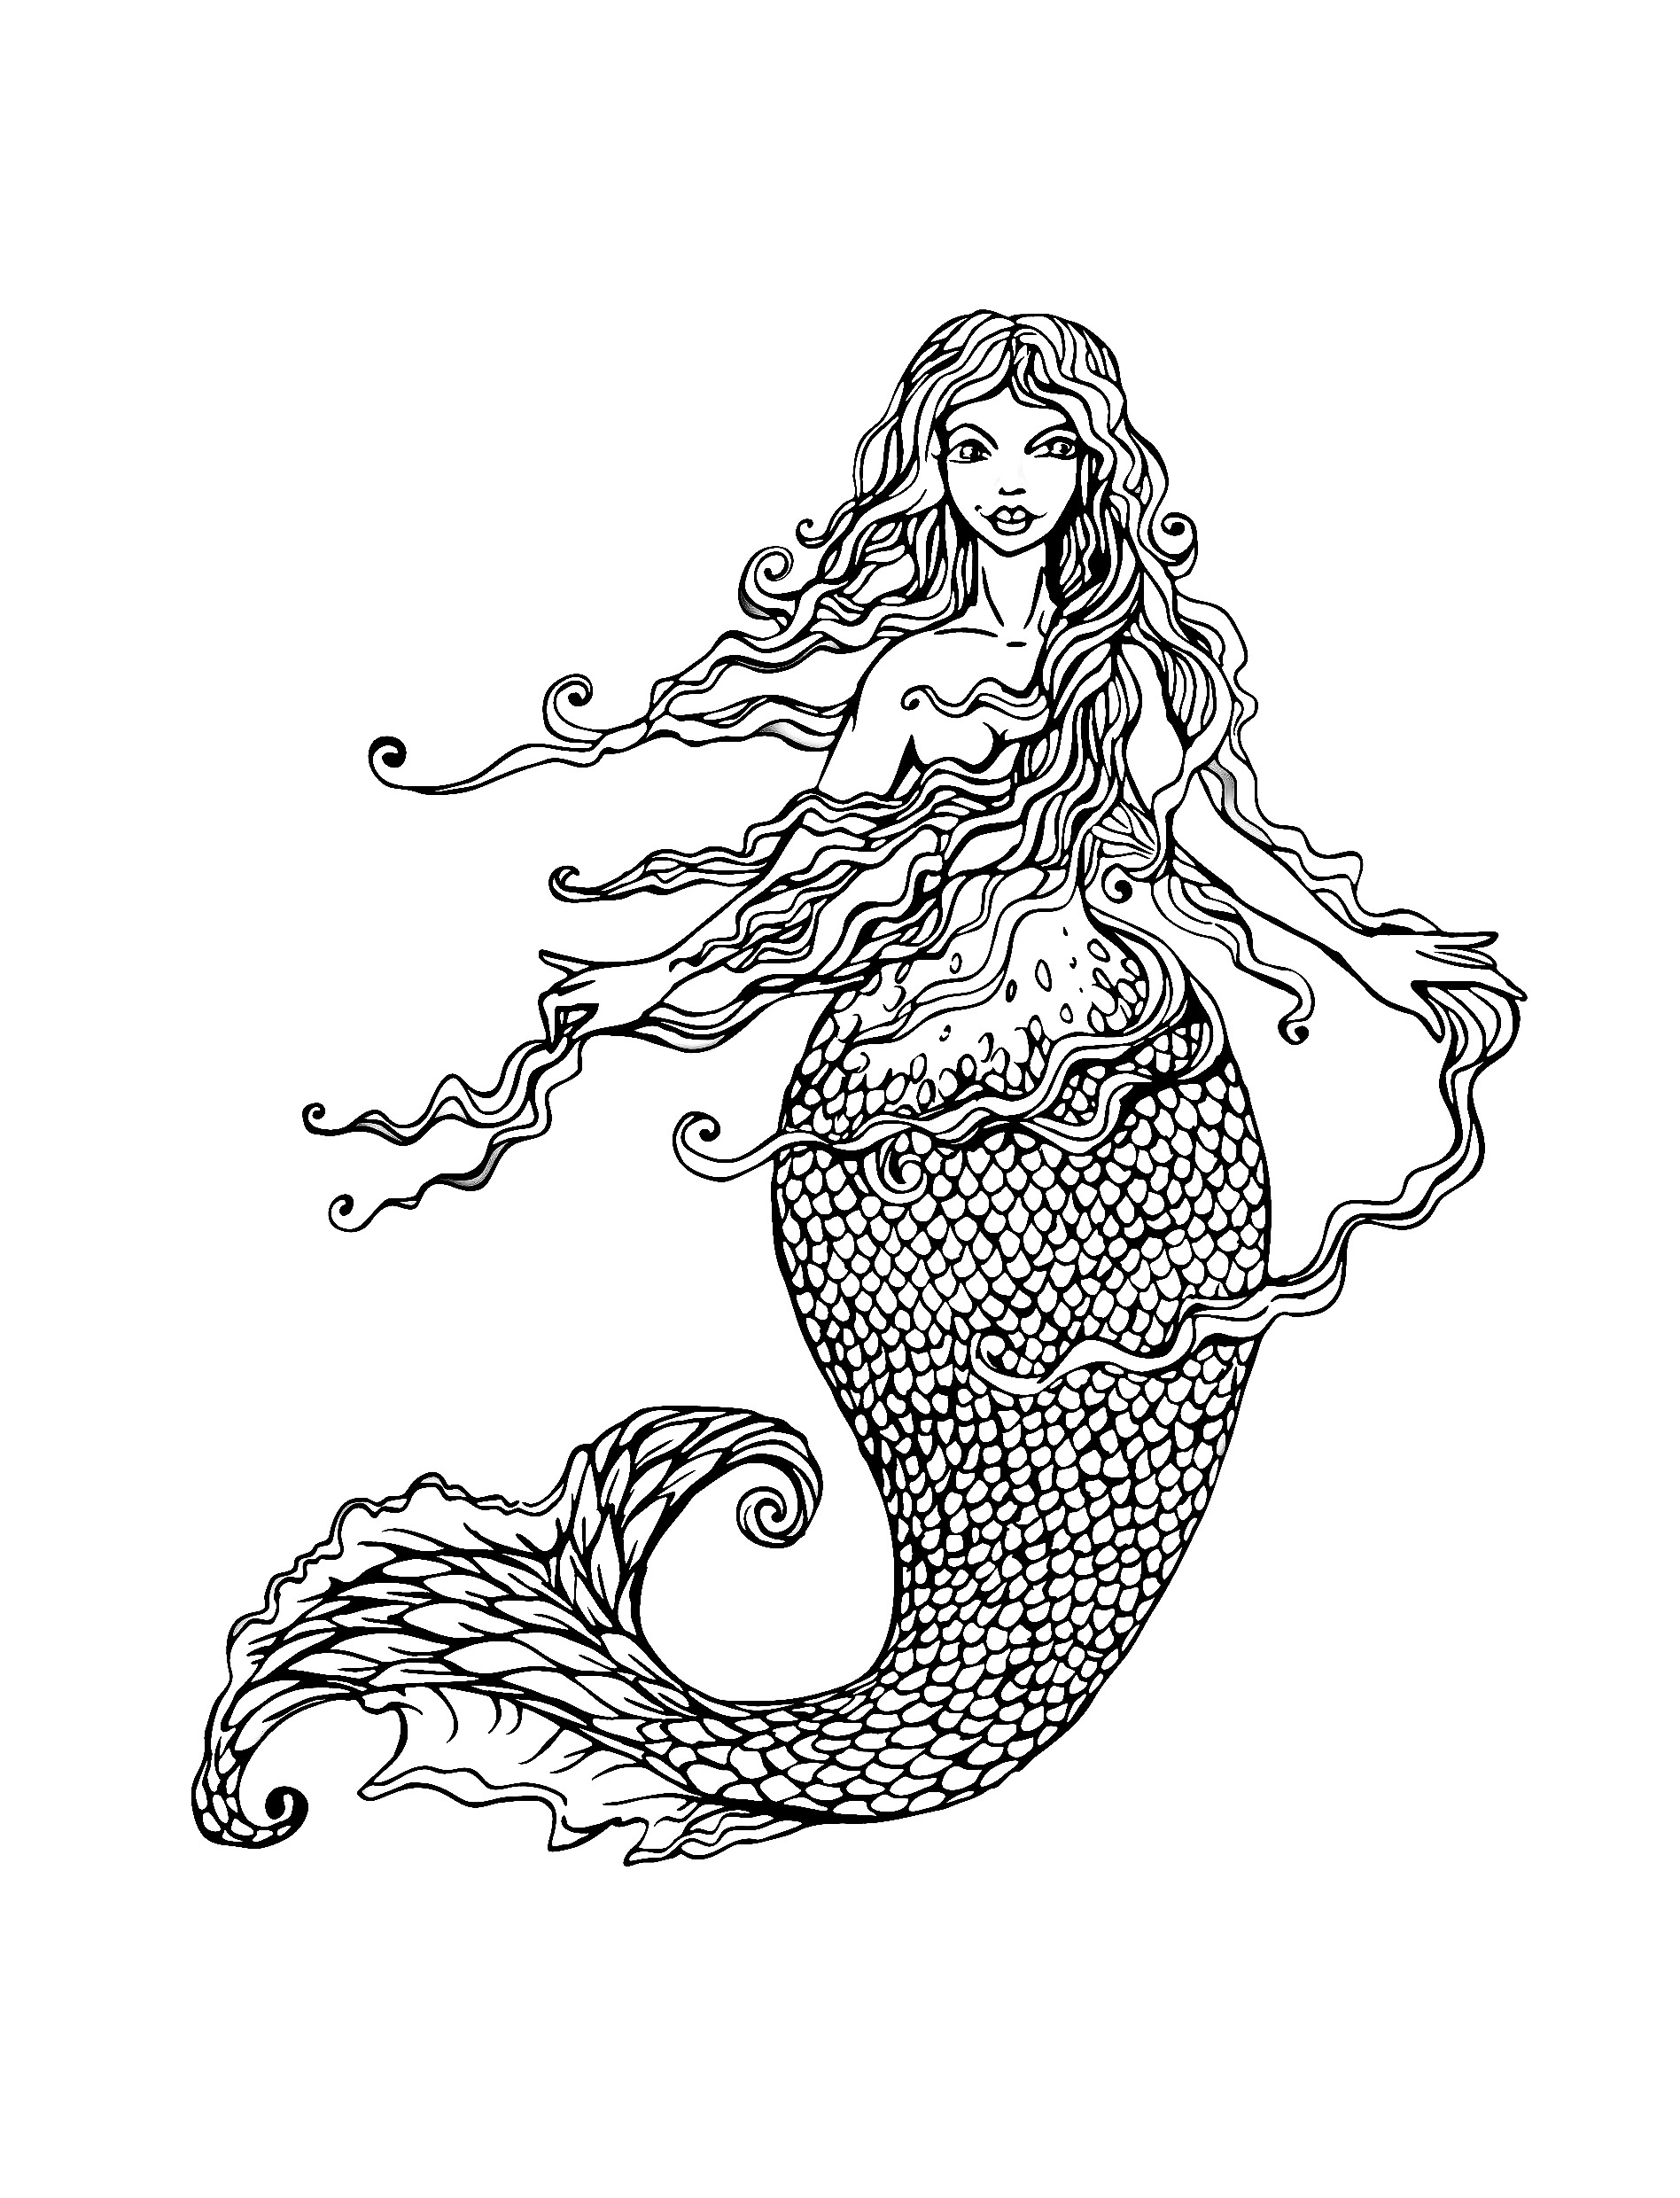 Mermaid with long hair, by Lian2011